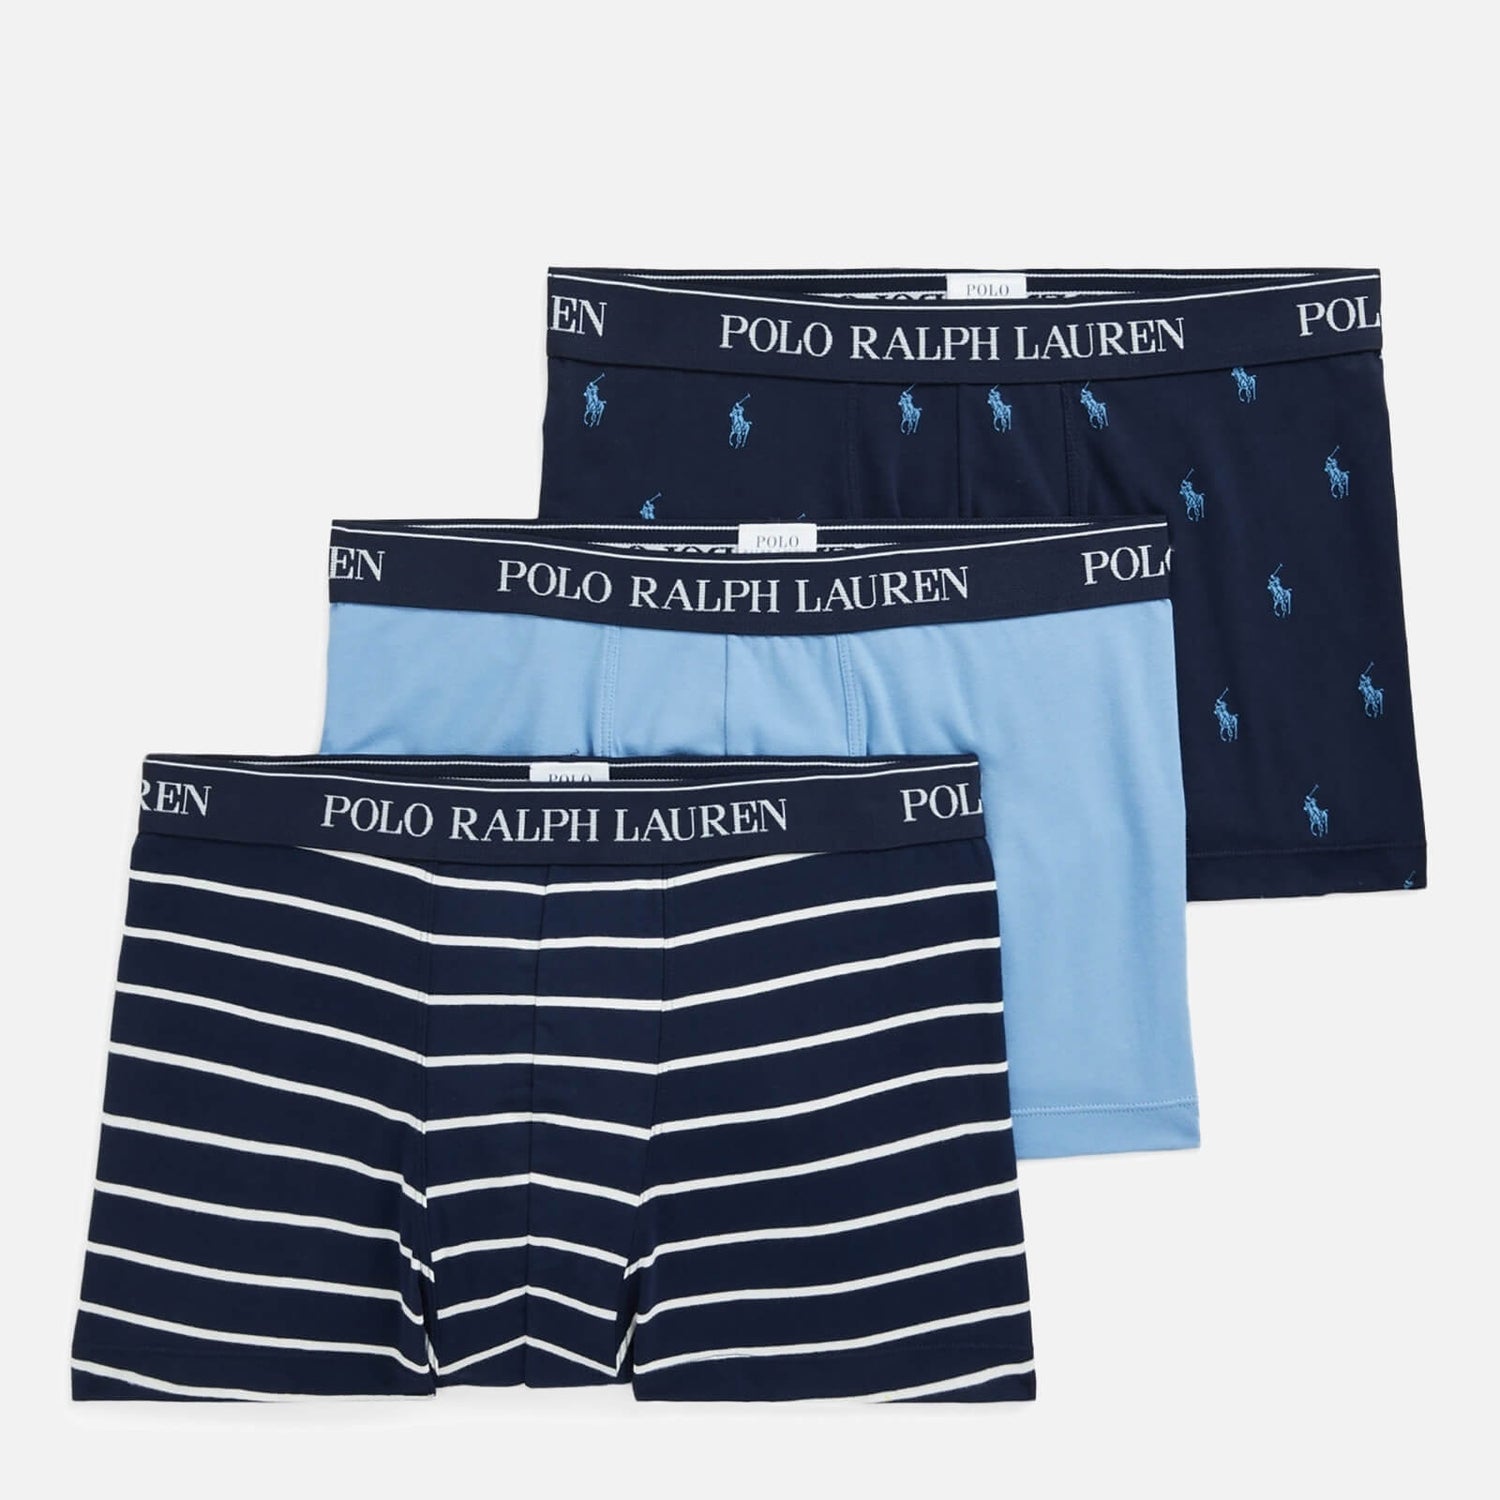 Polo Ralph Lauren Men's 3-Pack Classic Trunk Boxer Shorts - Navy AOP/Sky/Navy Stripe